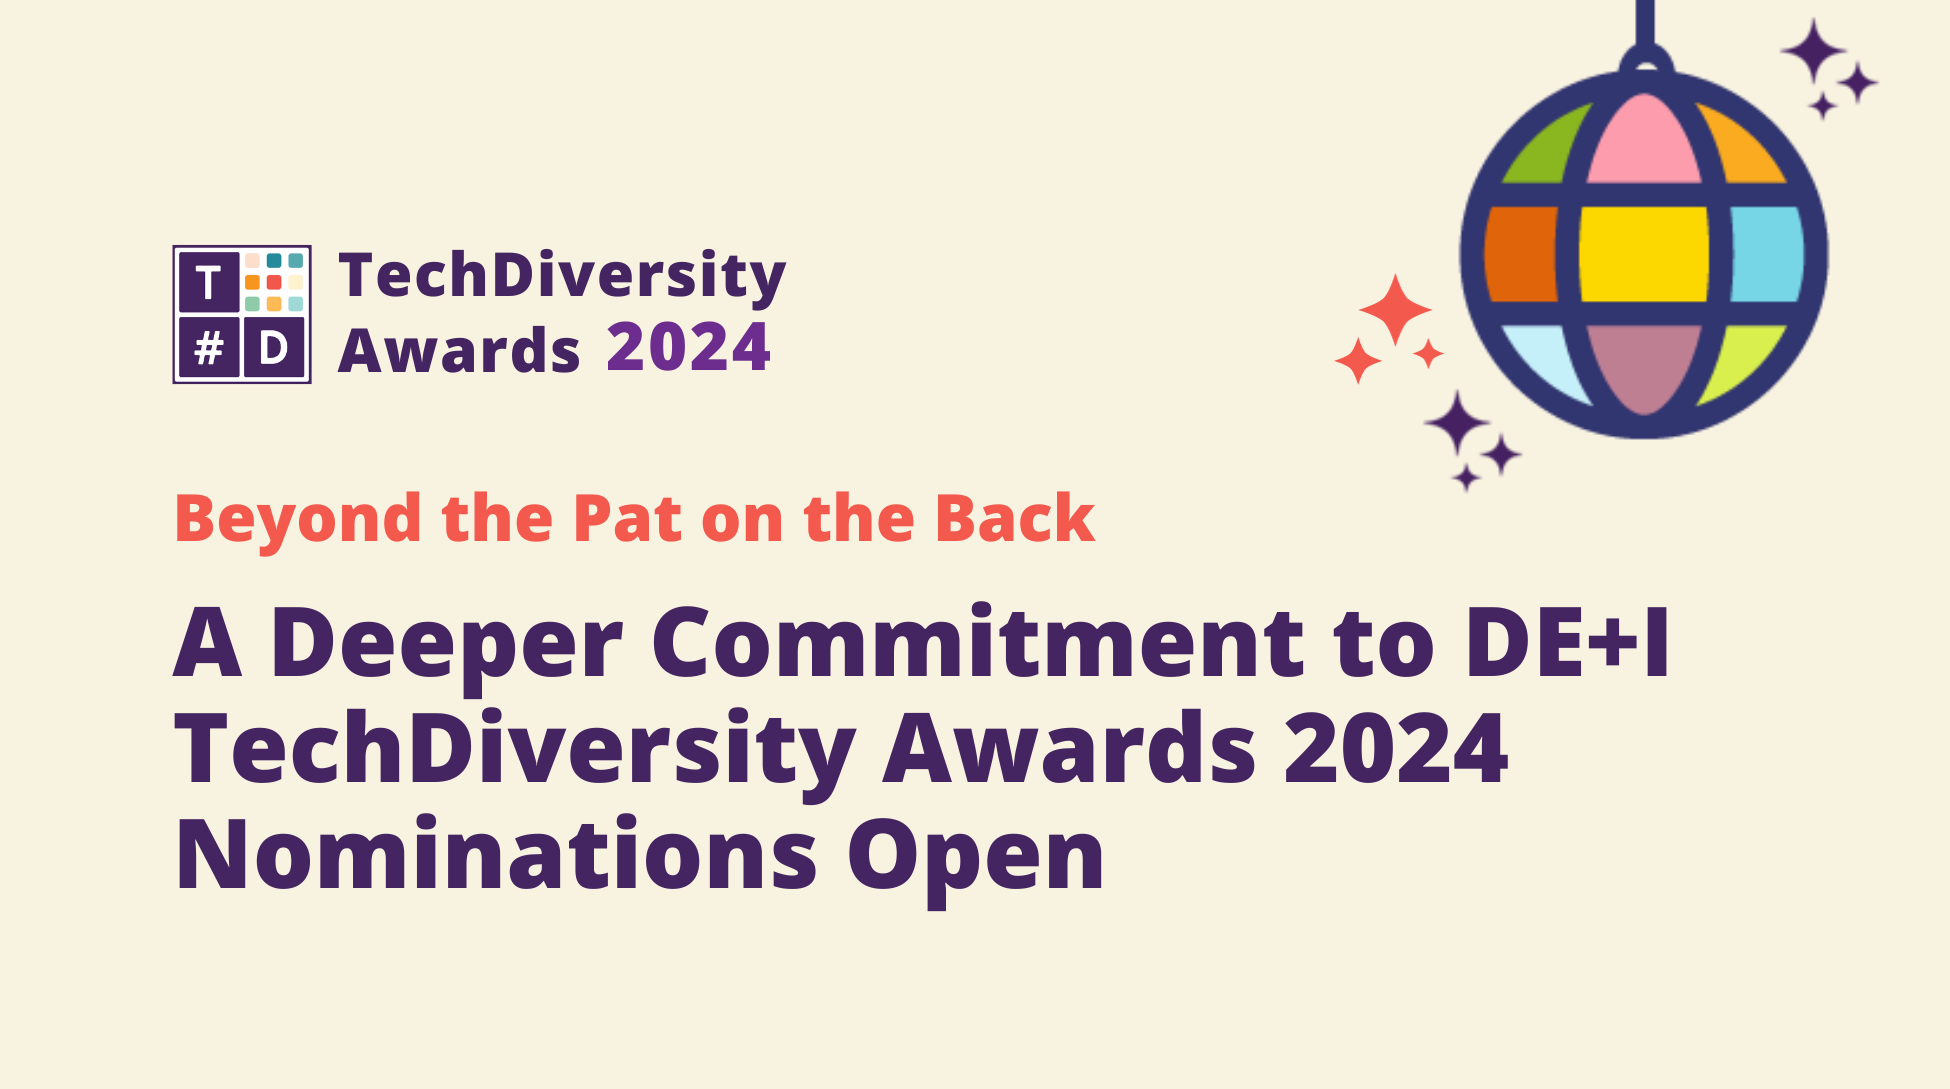 TechDiversity Awards 2024 - Nominations Open